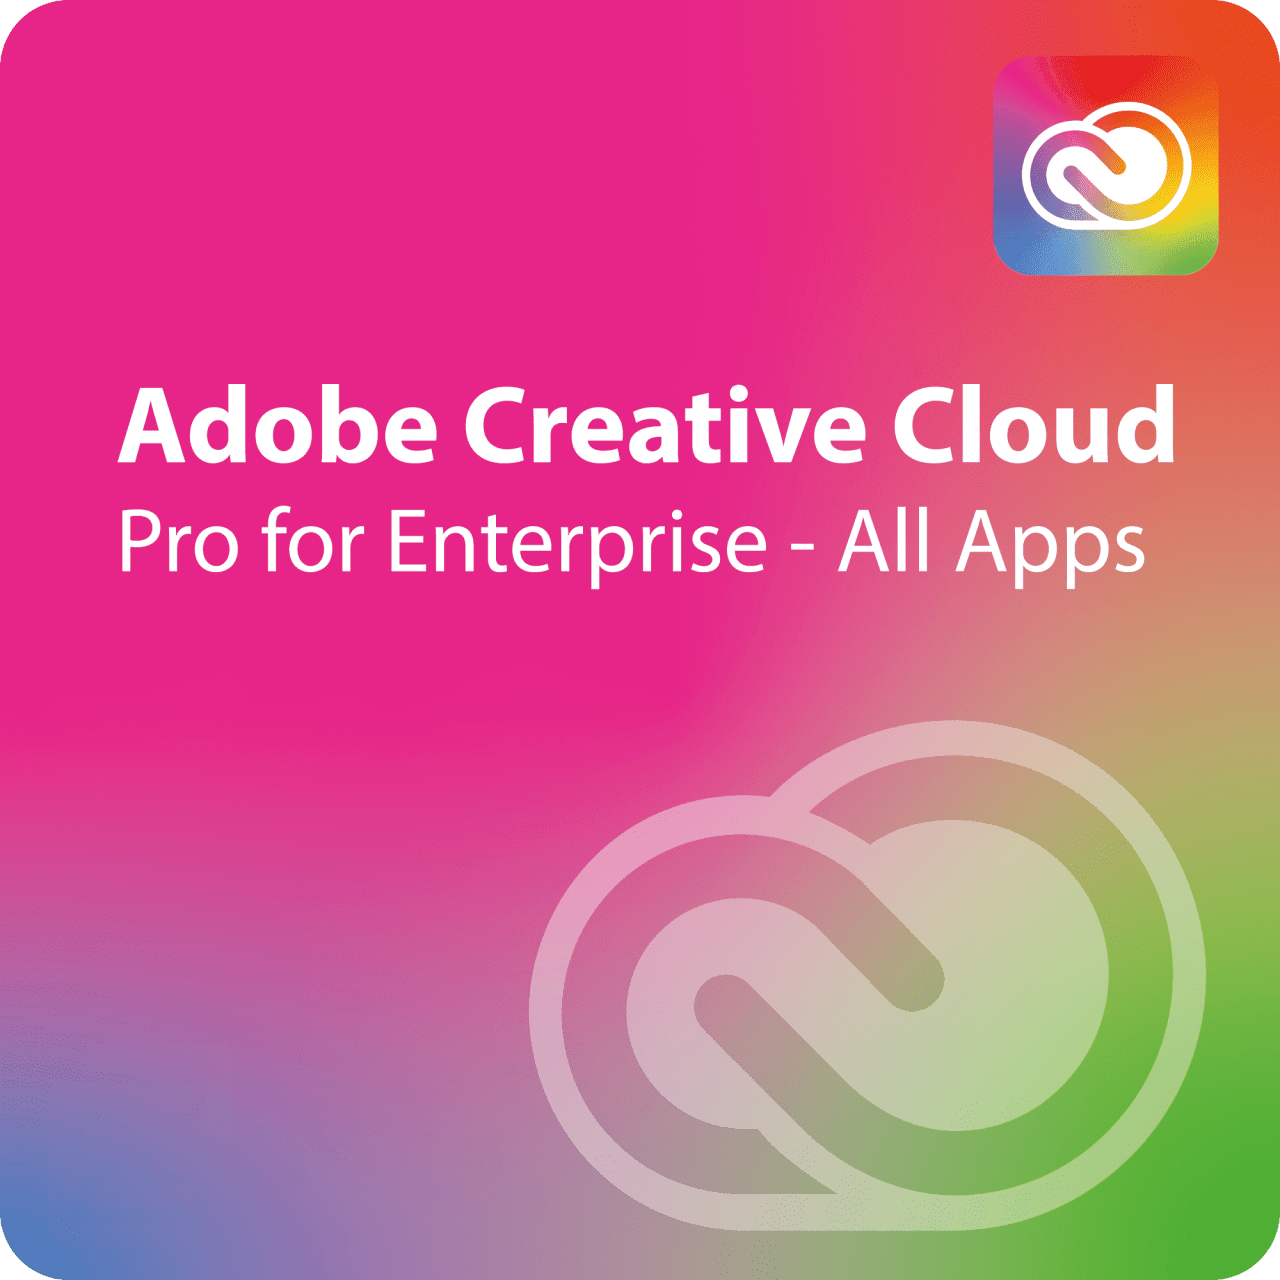 Adobe CC All Apps - Pro for Enterprise